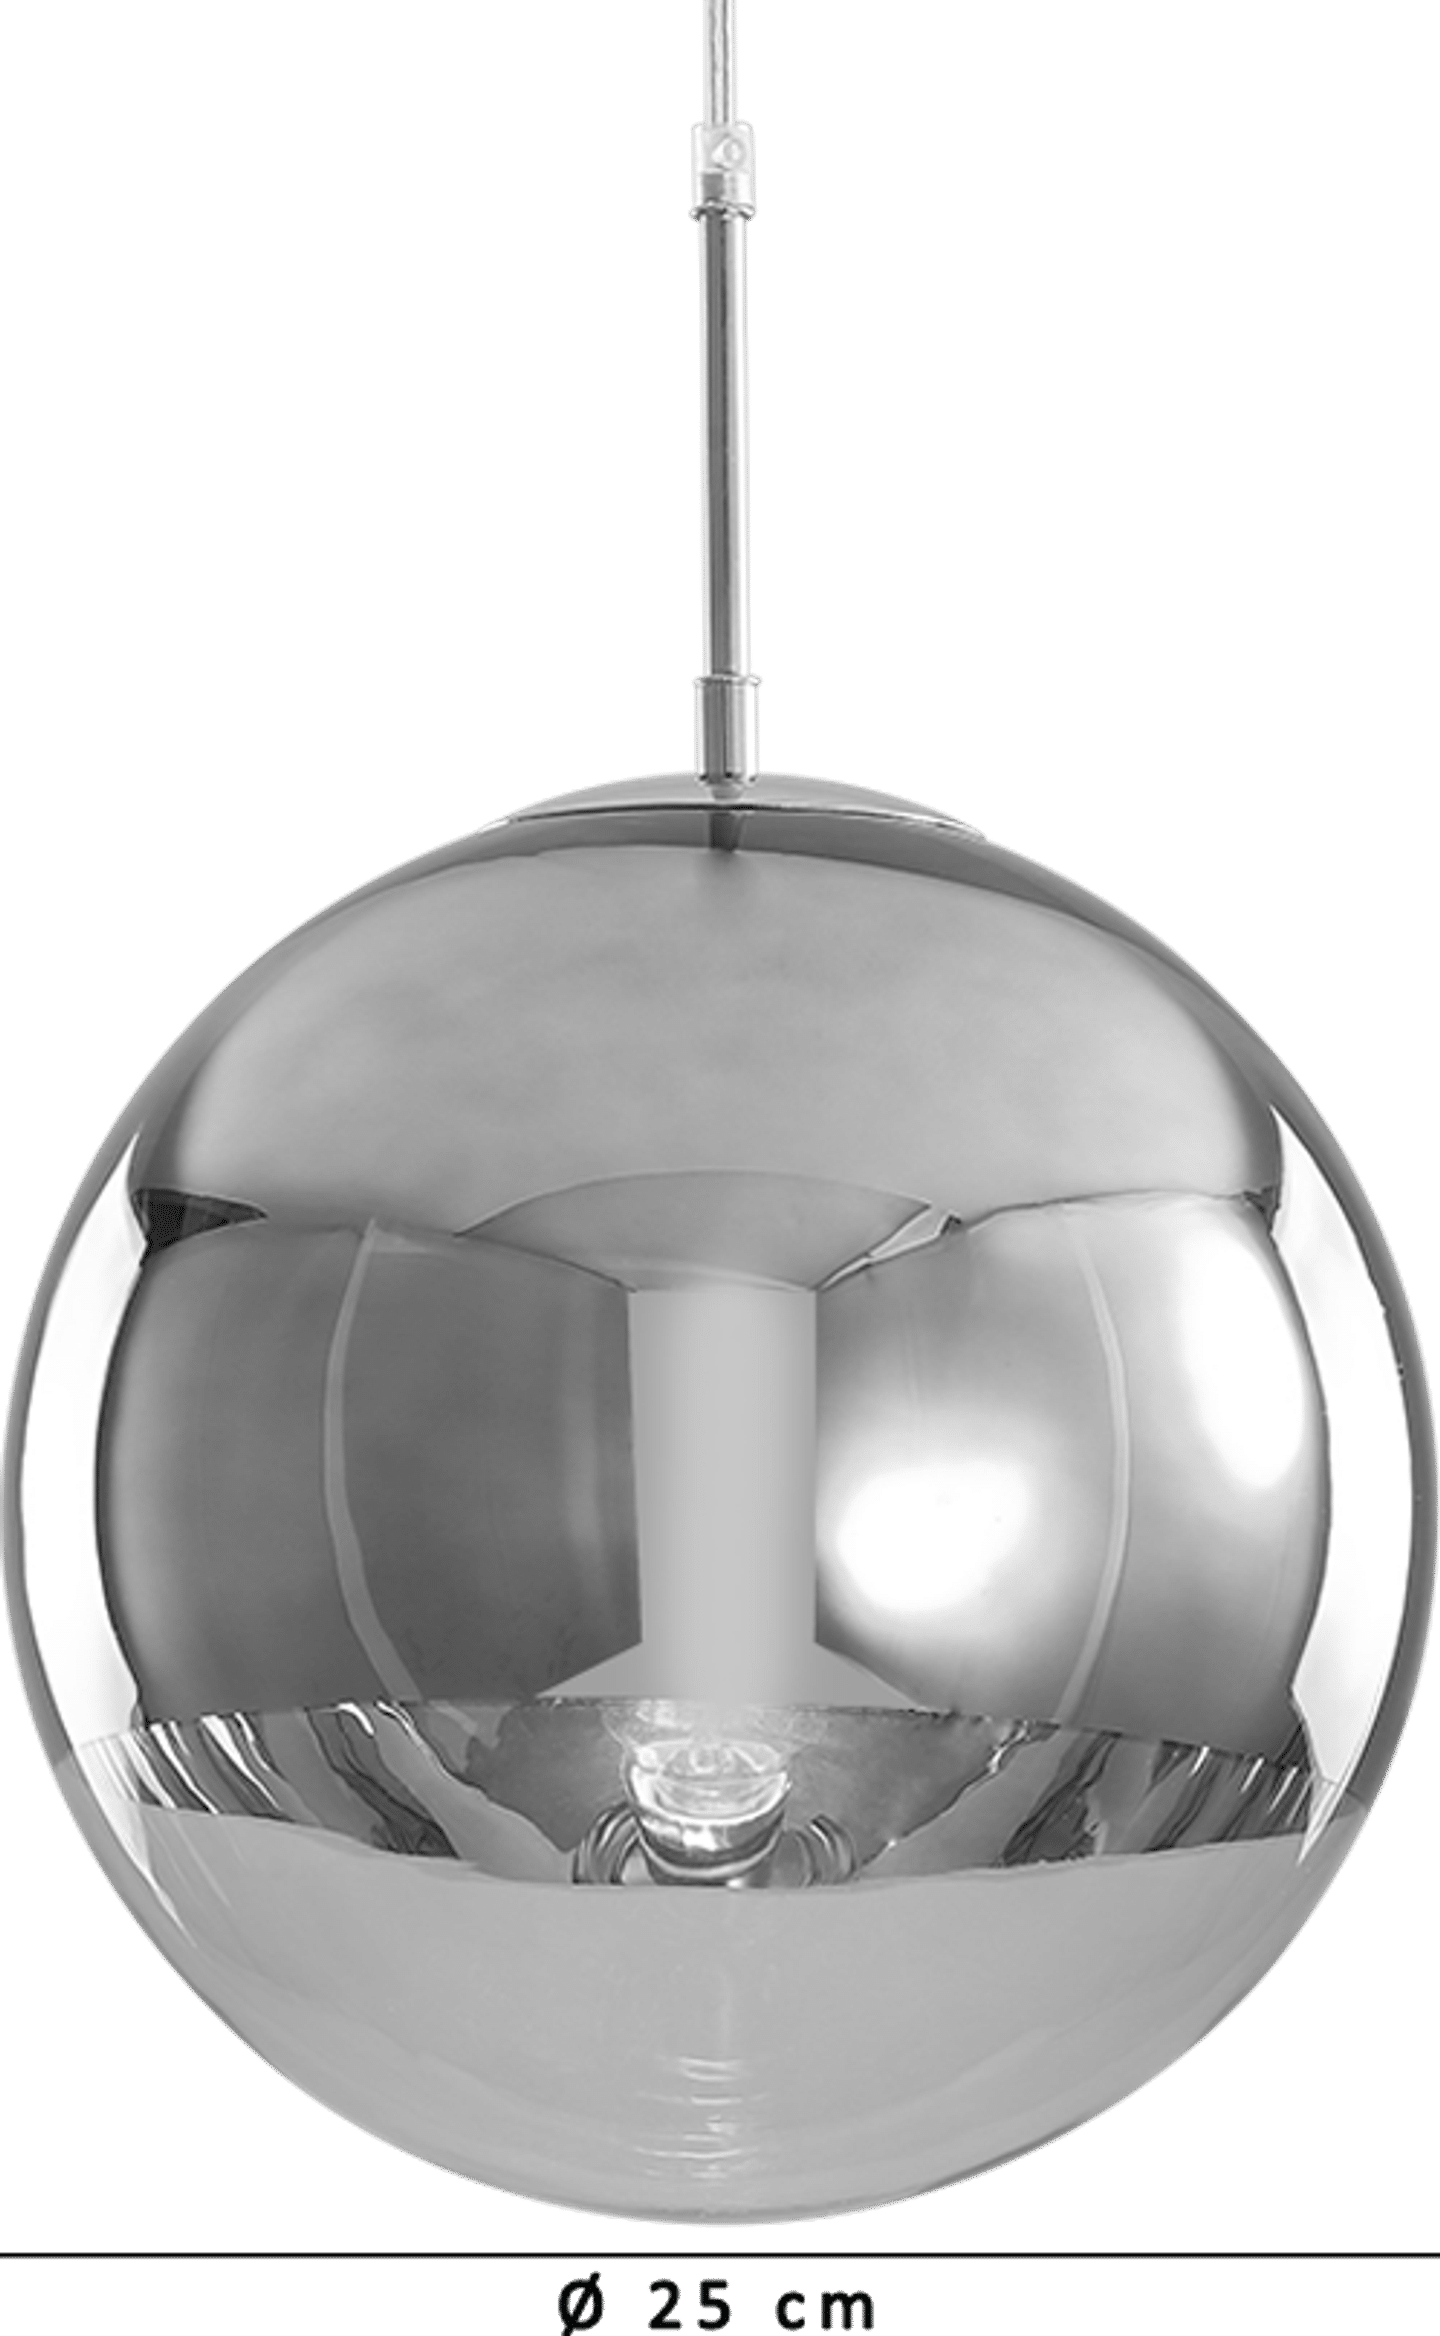 Spiegelbol hanglamp Chrome image.